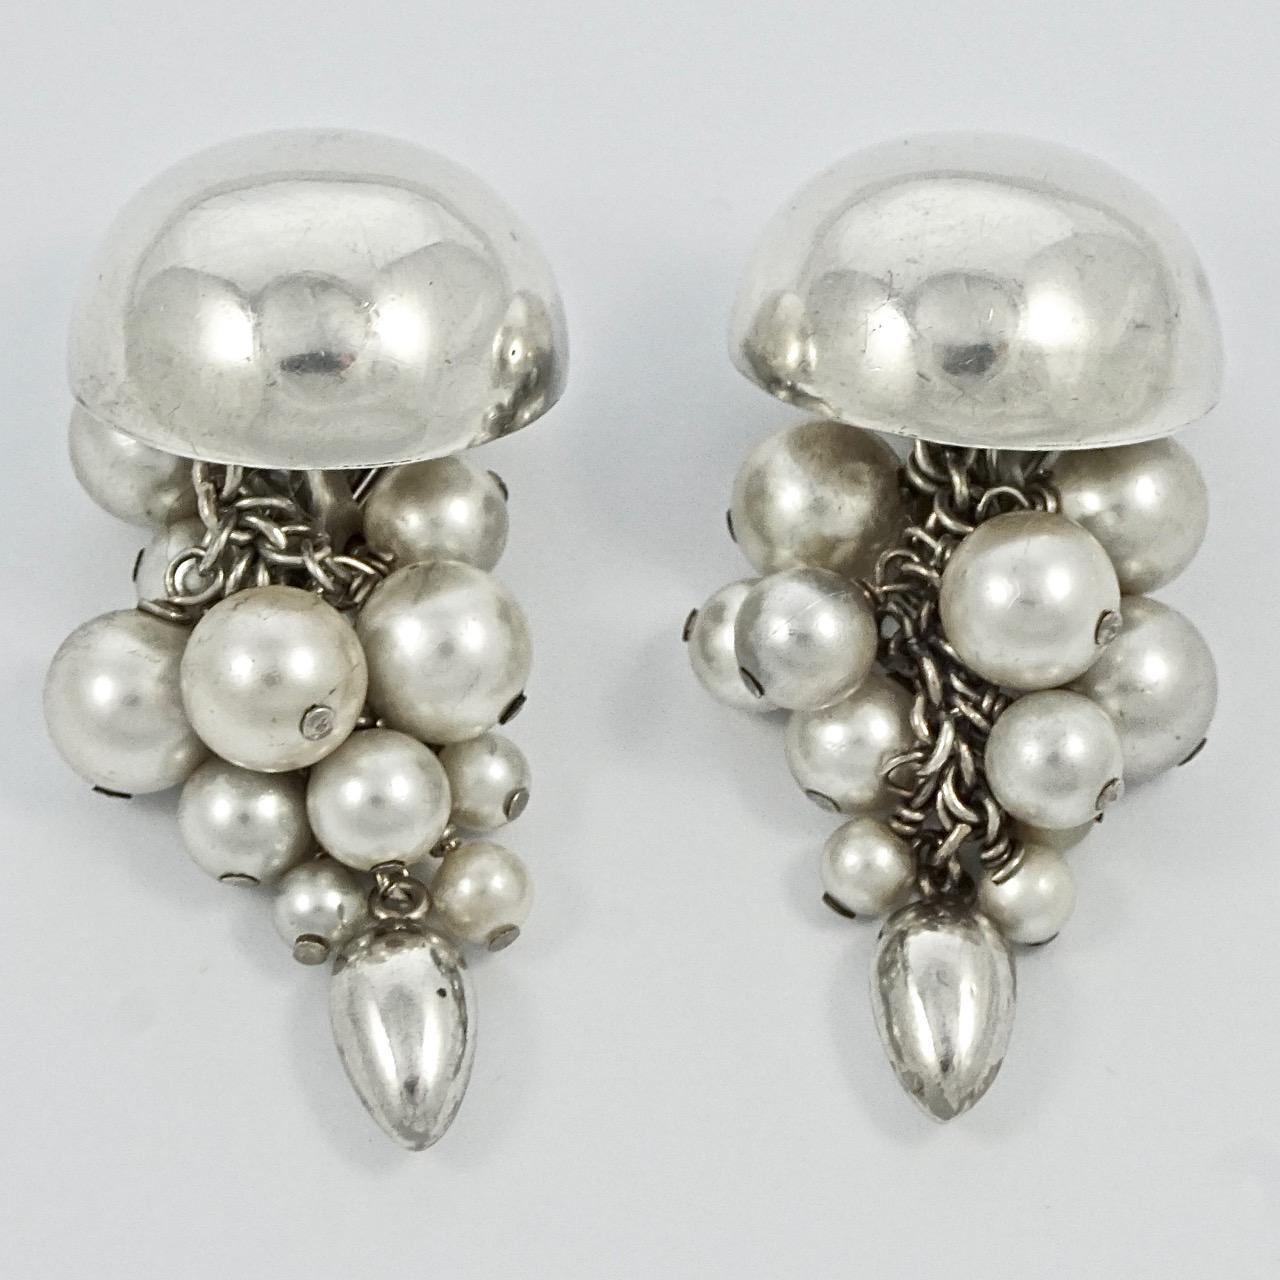 Jewellery Earrings Chandelier Earrings faux pearls gold tone ~ show stopper statement jewellery Fab dangle cluster grape pearl earrings vintage 1950's or 1960's new old stock 